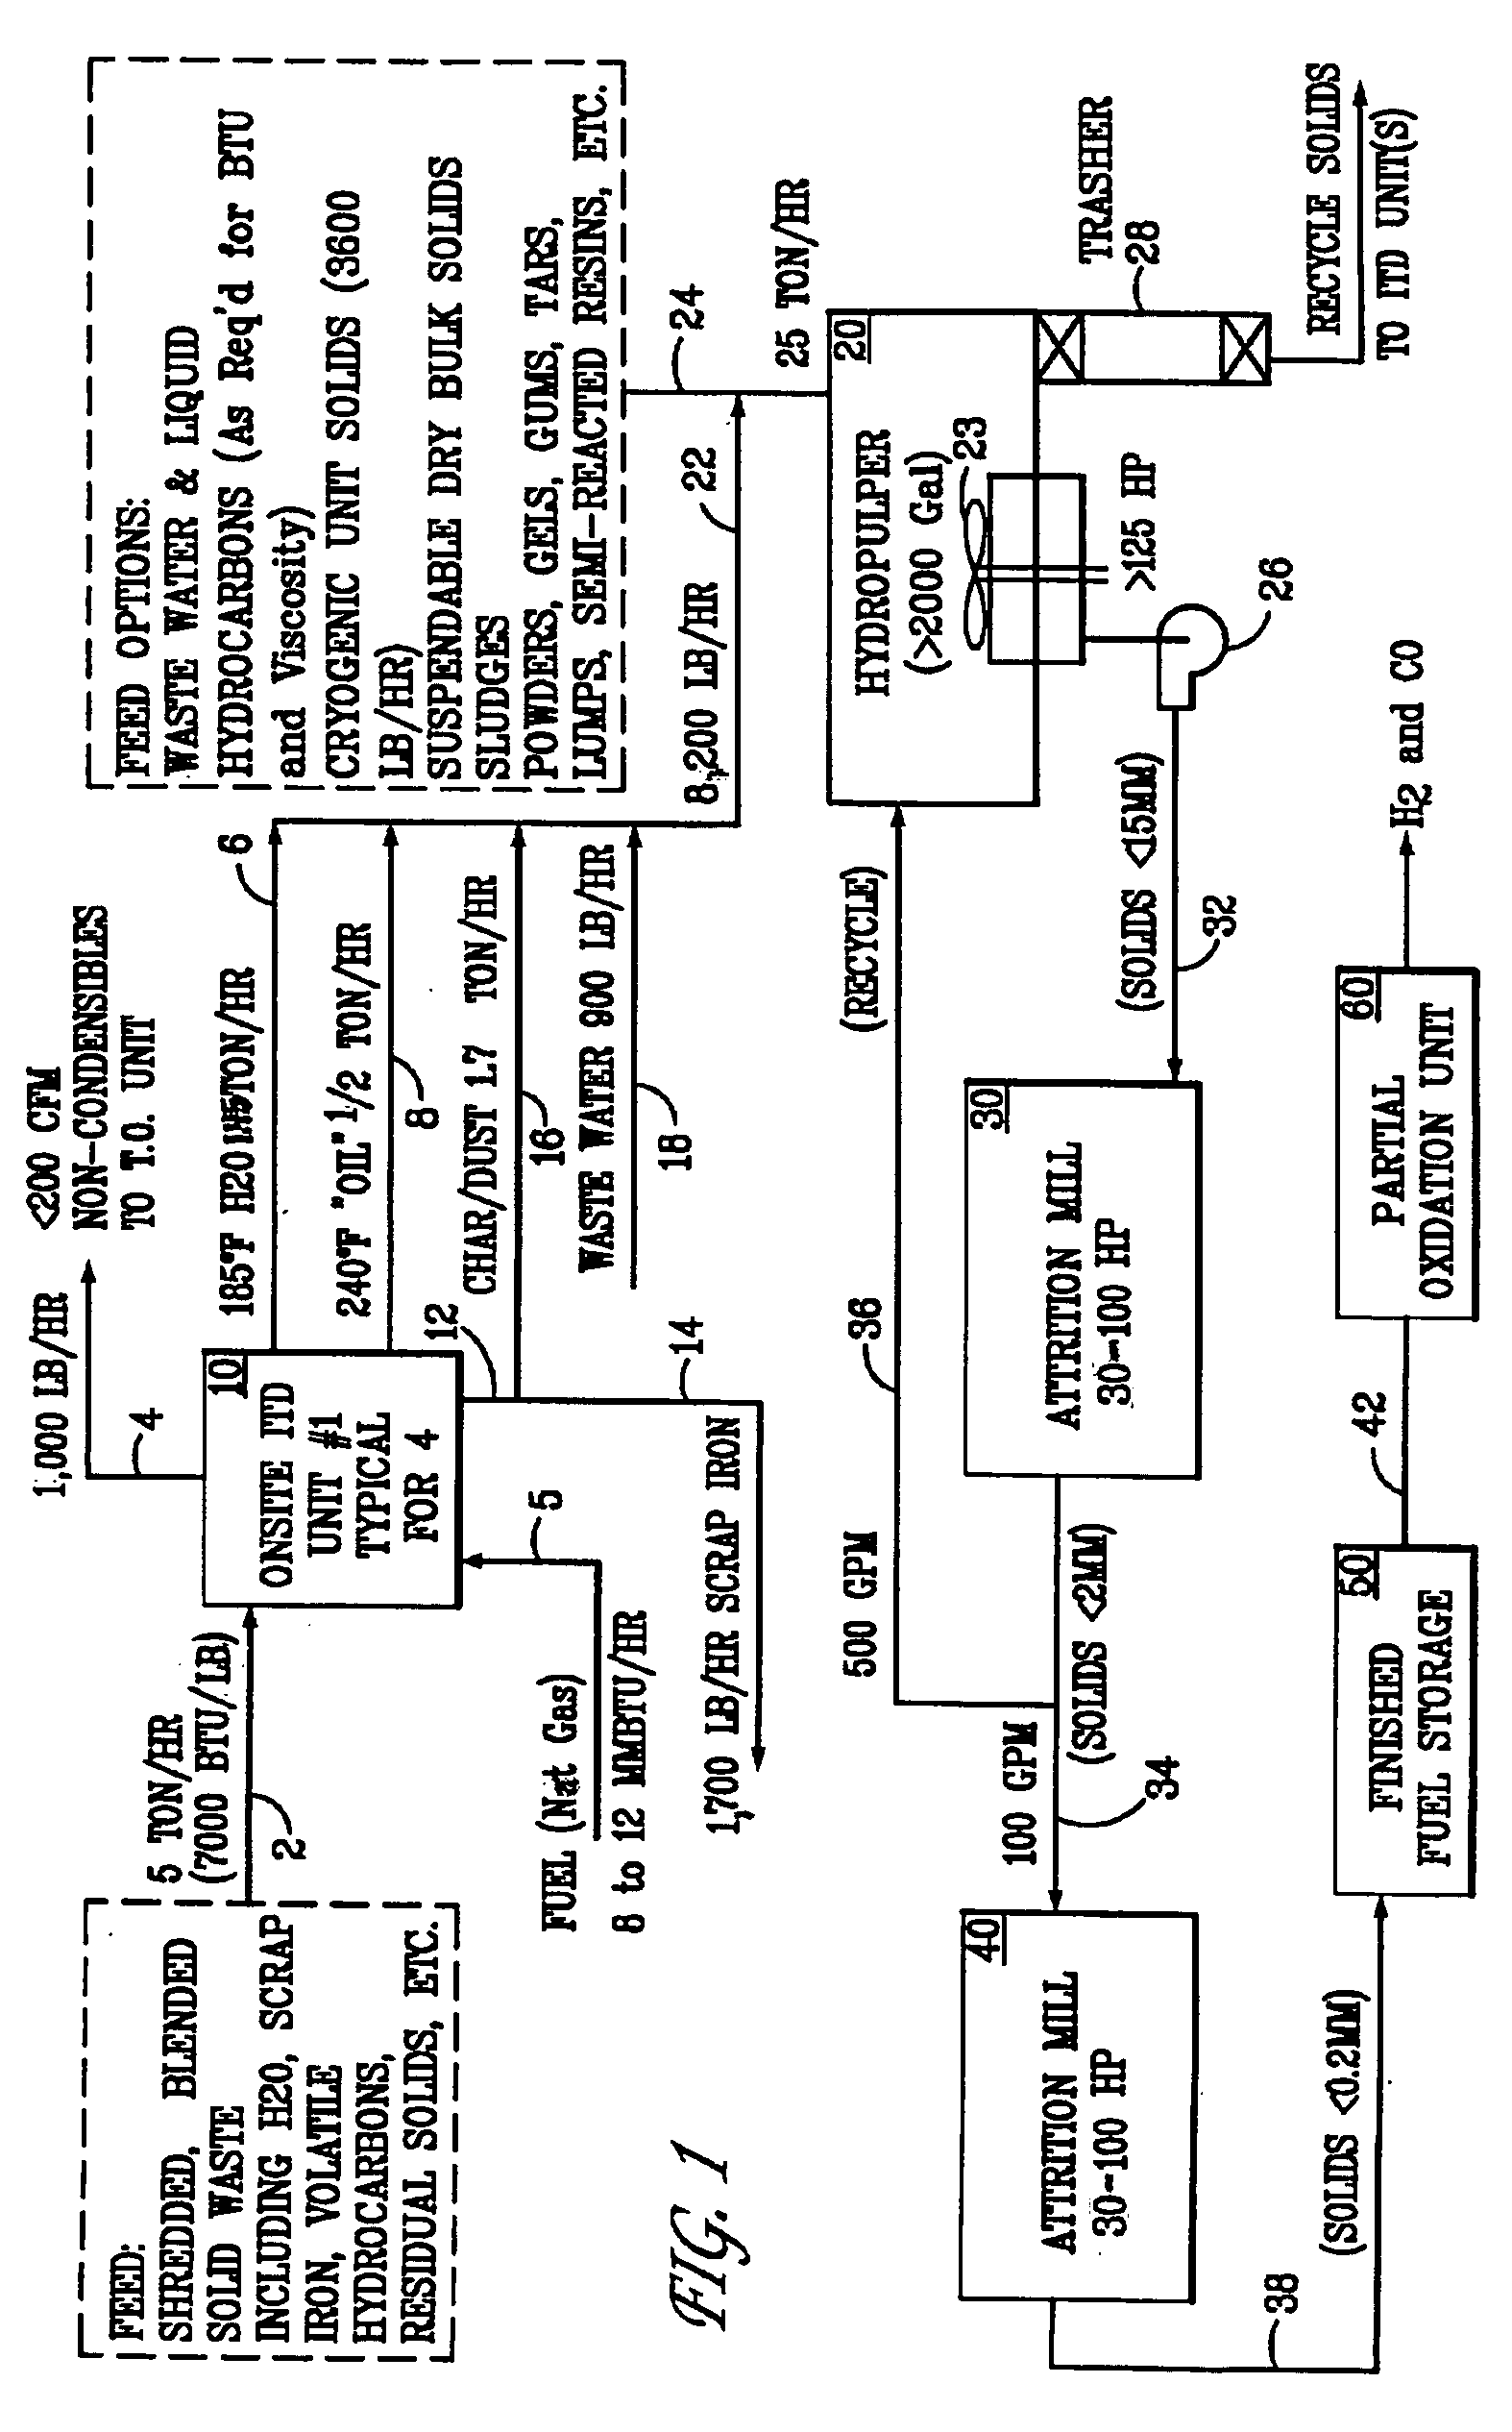 Process for producing a liquid fuel composition